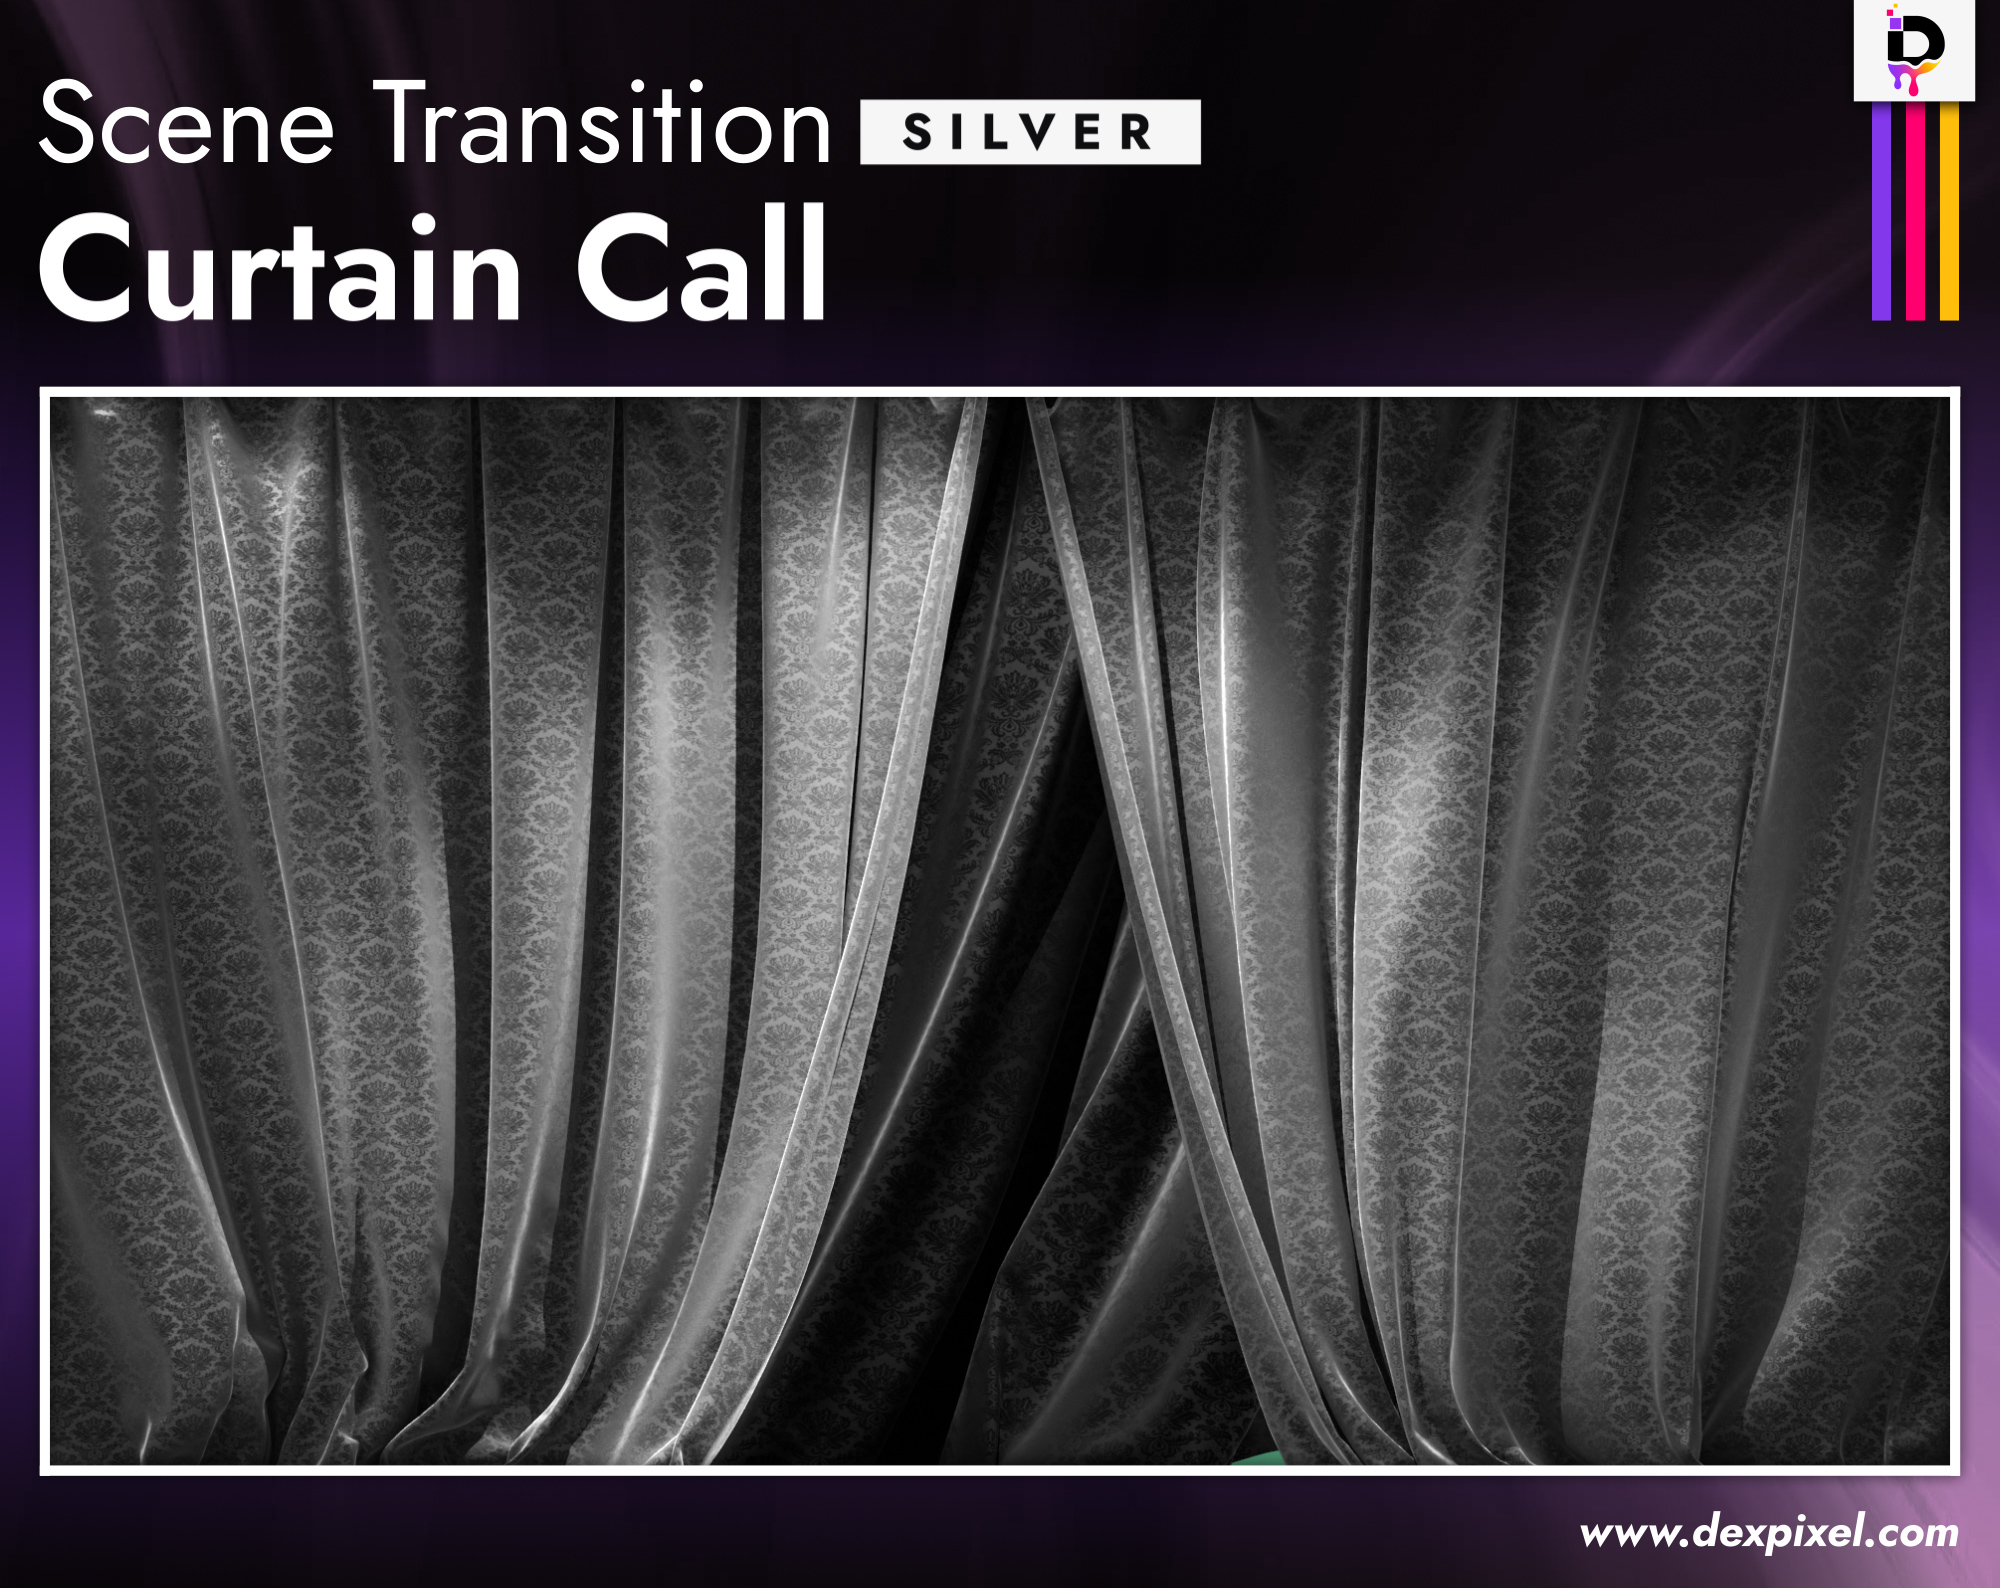 Scene Transition Dexpixel Curtain Call Silver